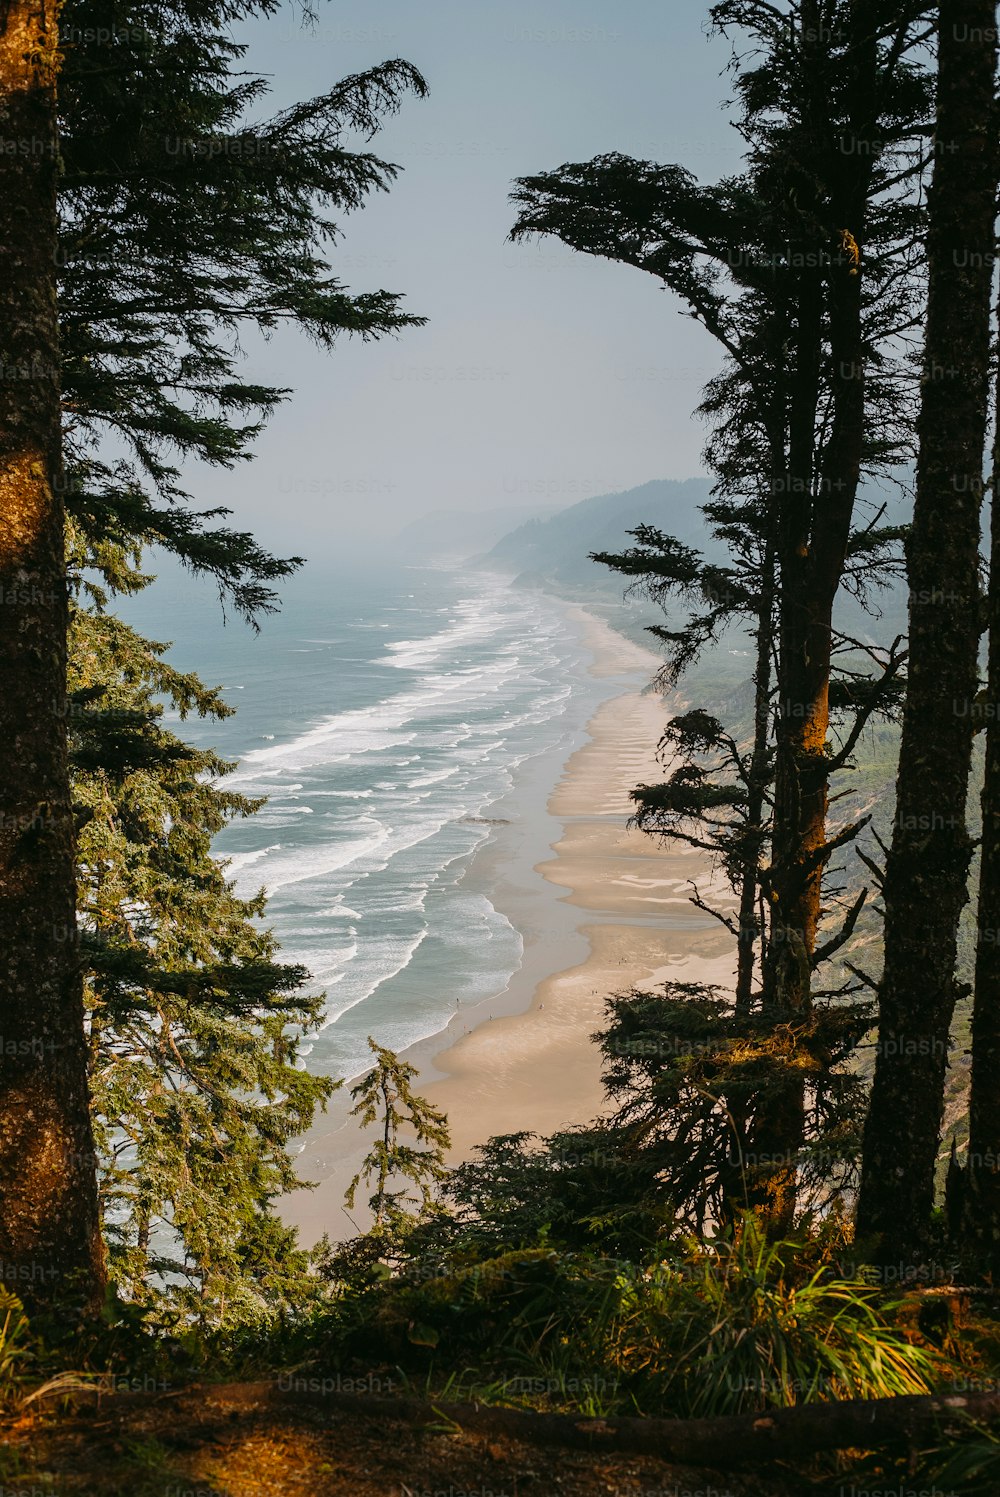 a view of a beach through some trees